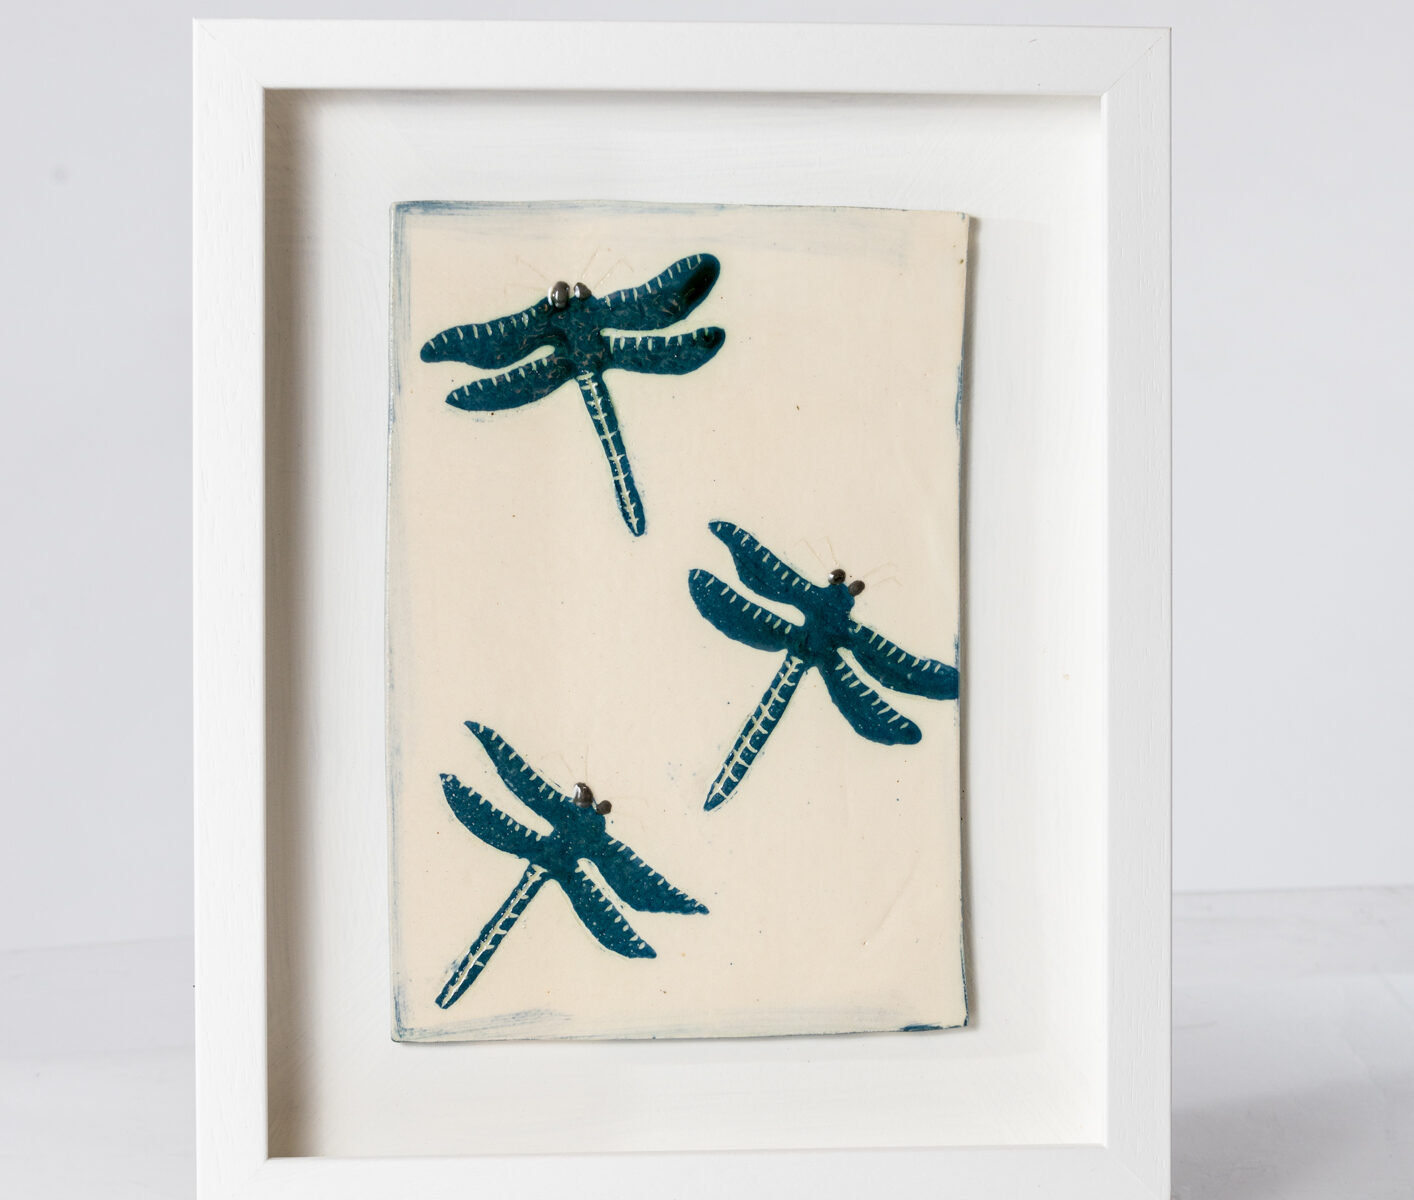 Dragonfly Tile framed